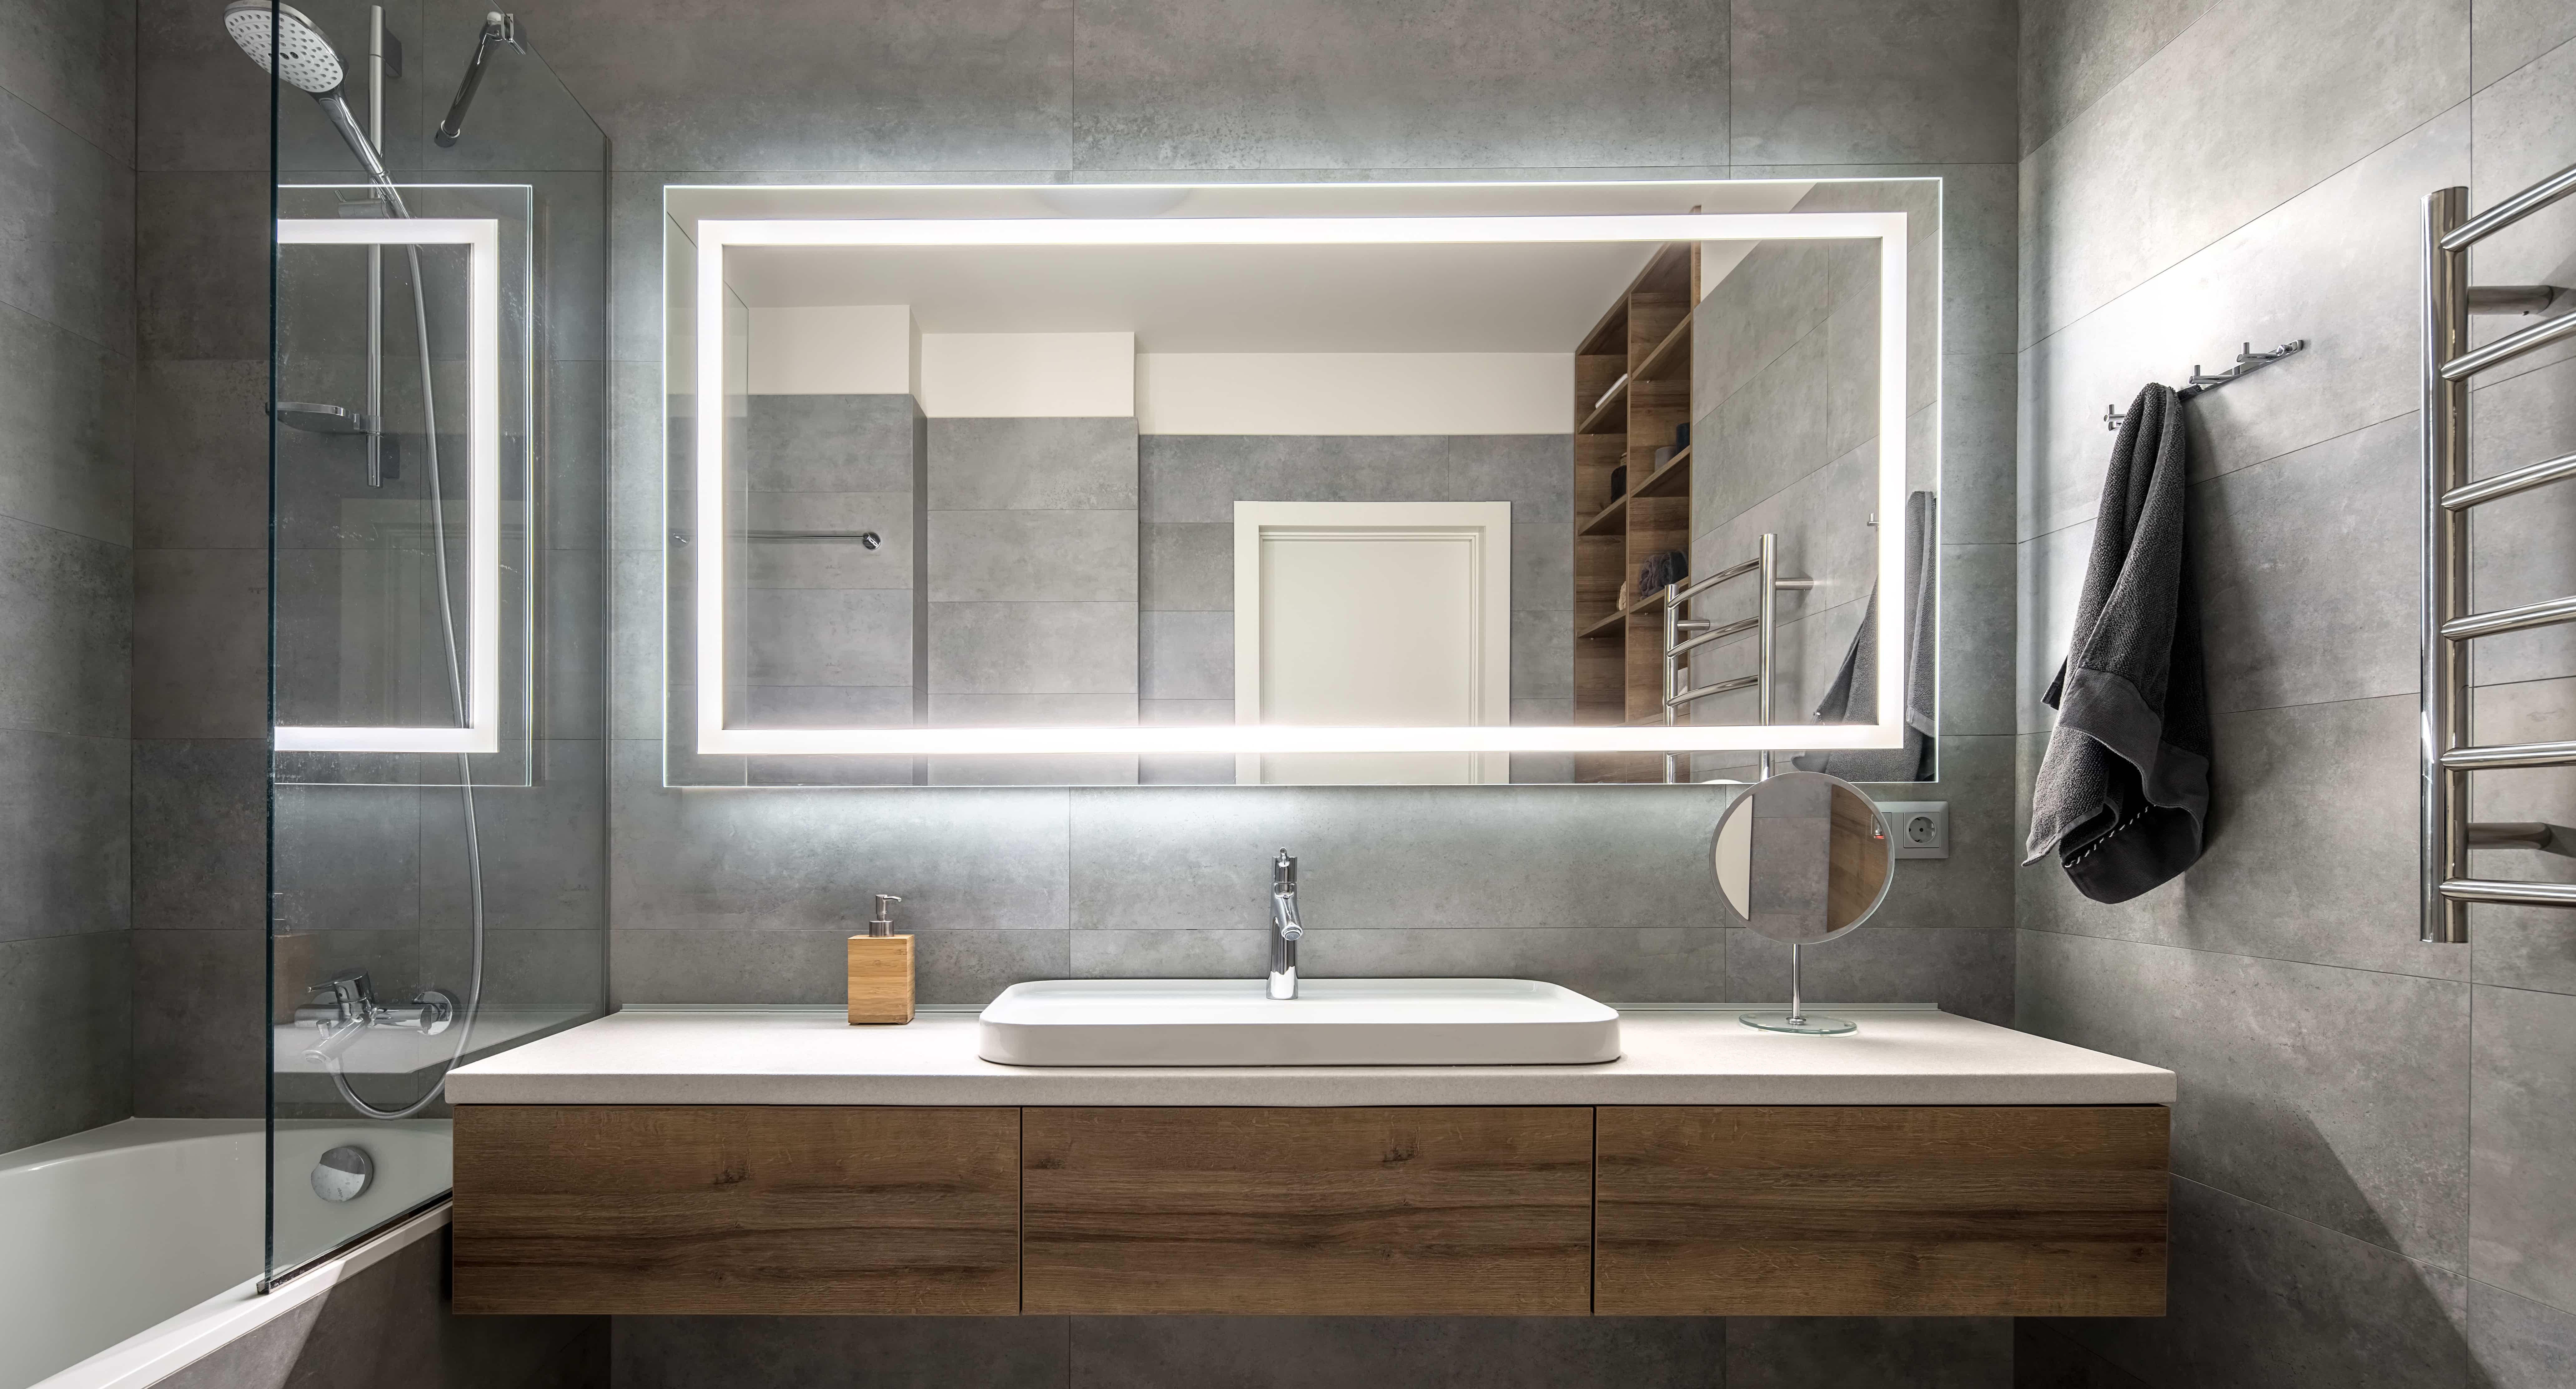 Why add a Backlit Mirror to your bathroom